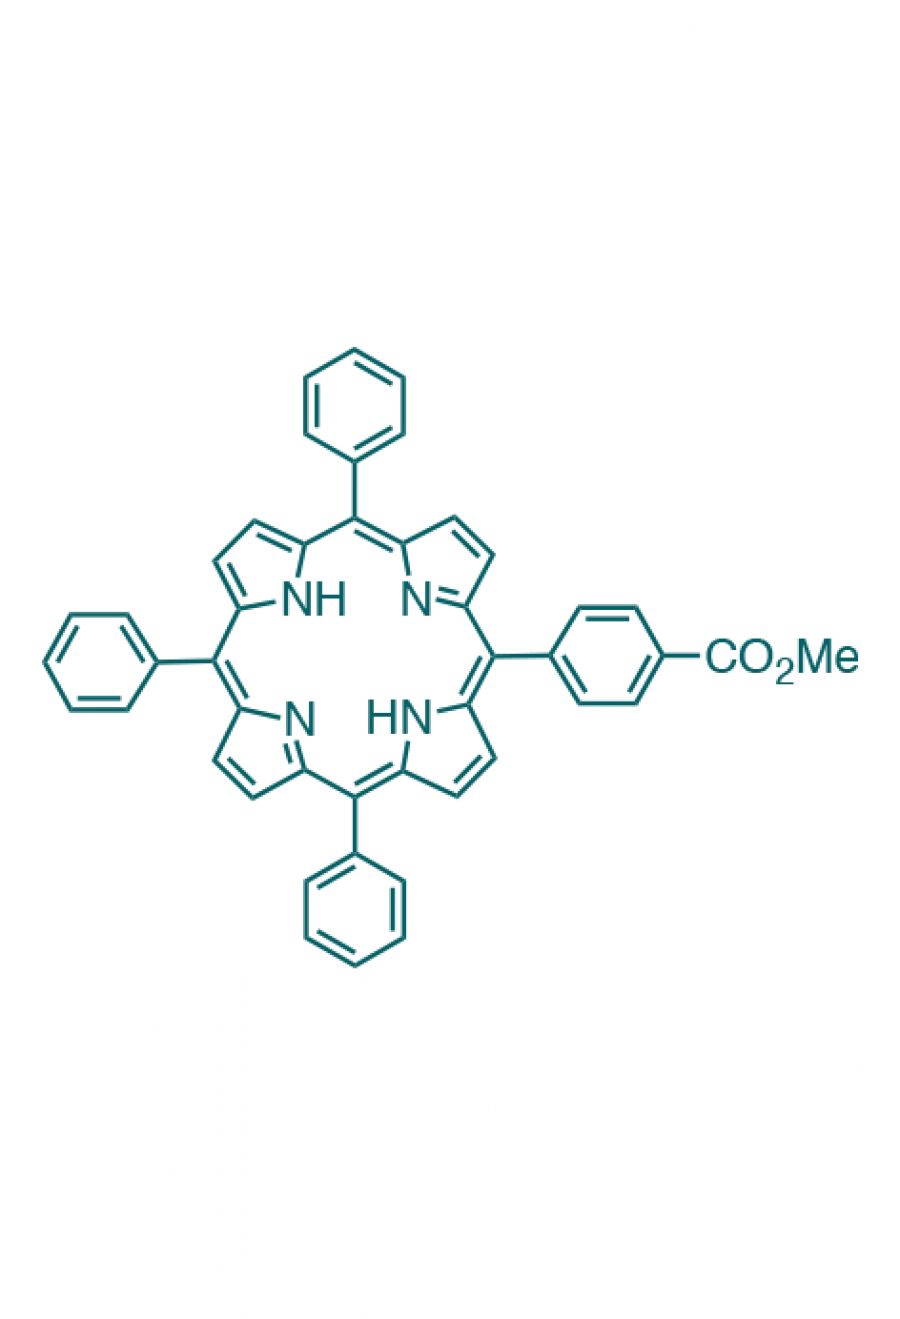 5-(4-methoxycarbonylphenyl)-10,15,20-(triphenyl)porphyrin  | Porphychem Expert porphyrin synthesis for research & industry